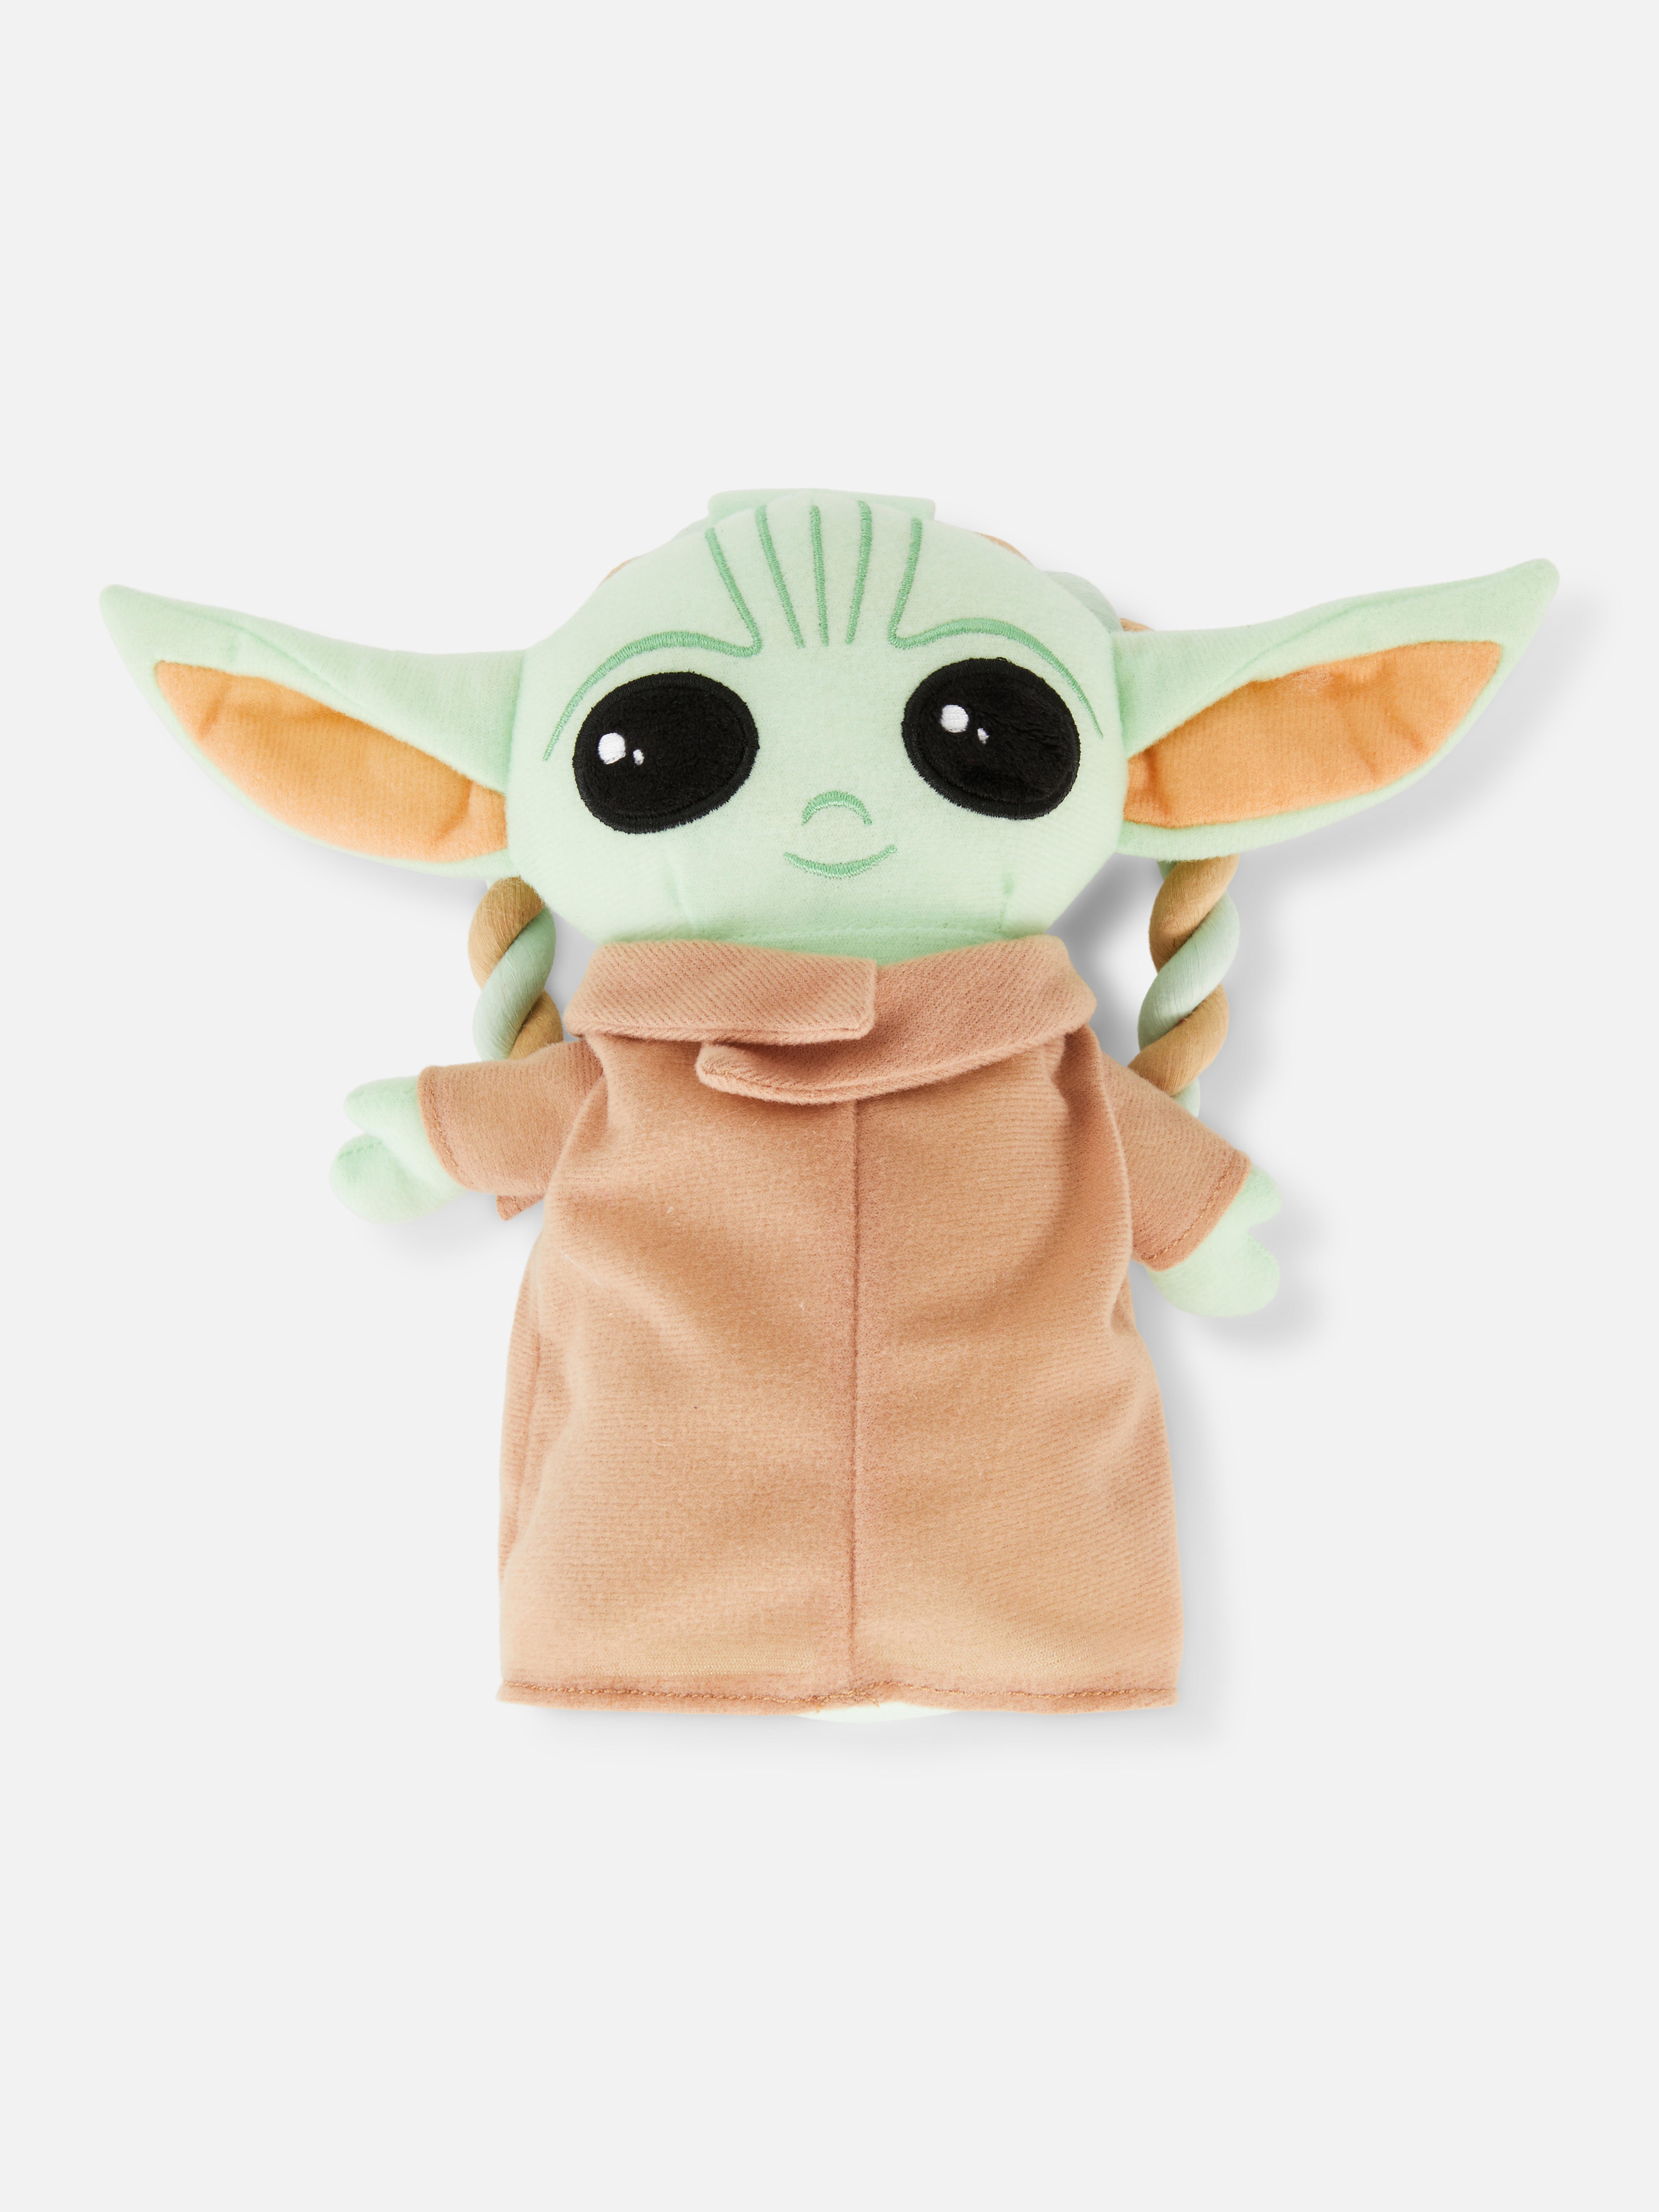 Star Wars Baby Yoda Pet Plush